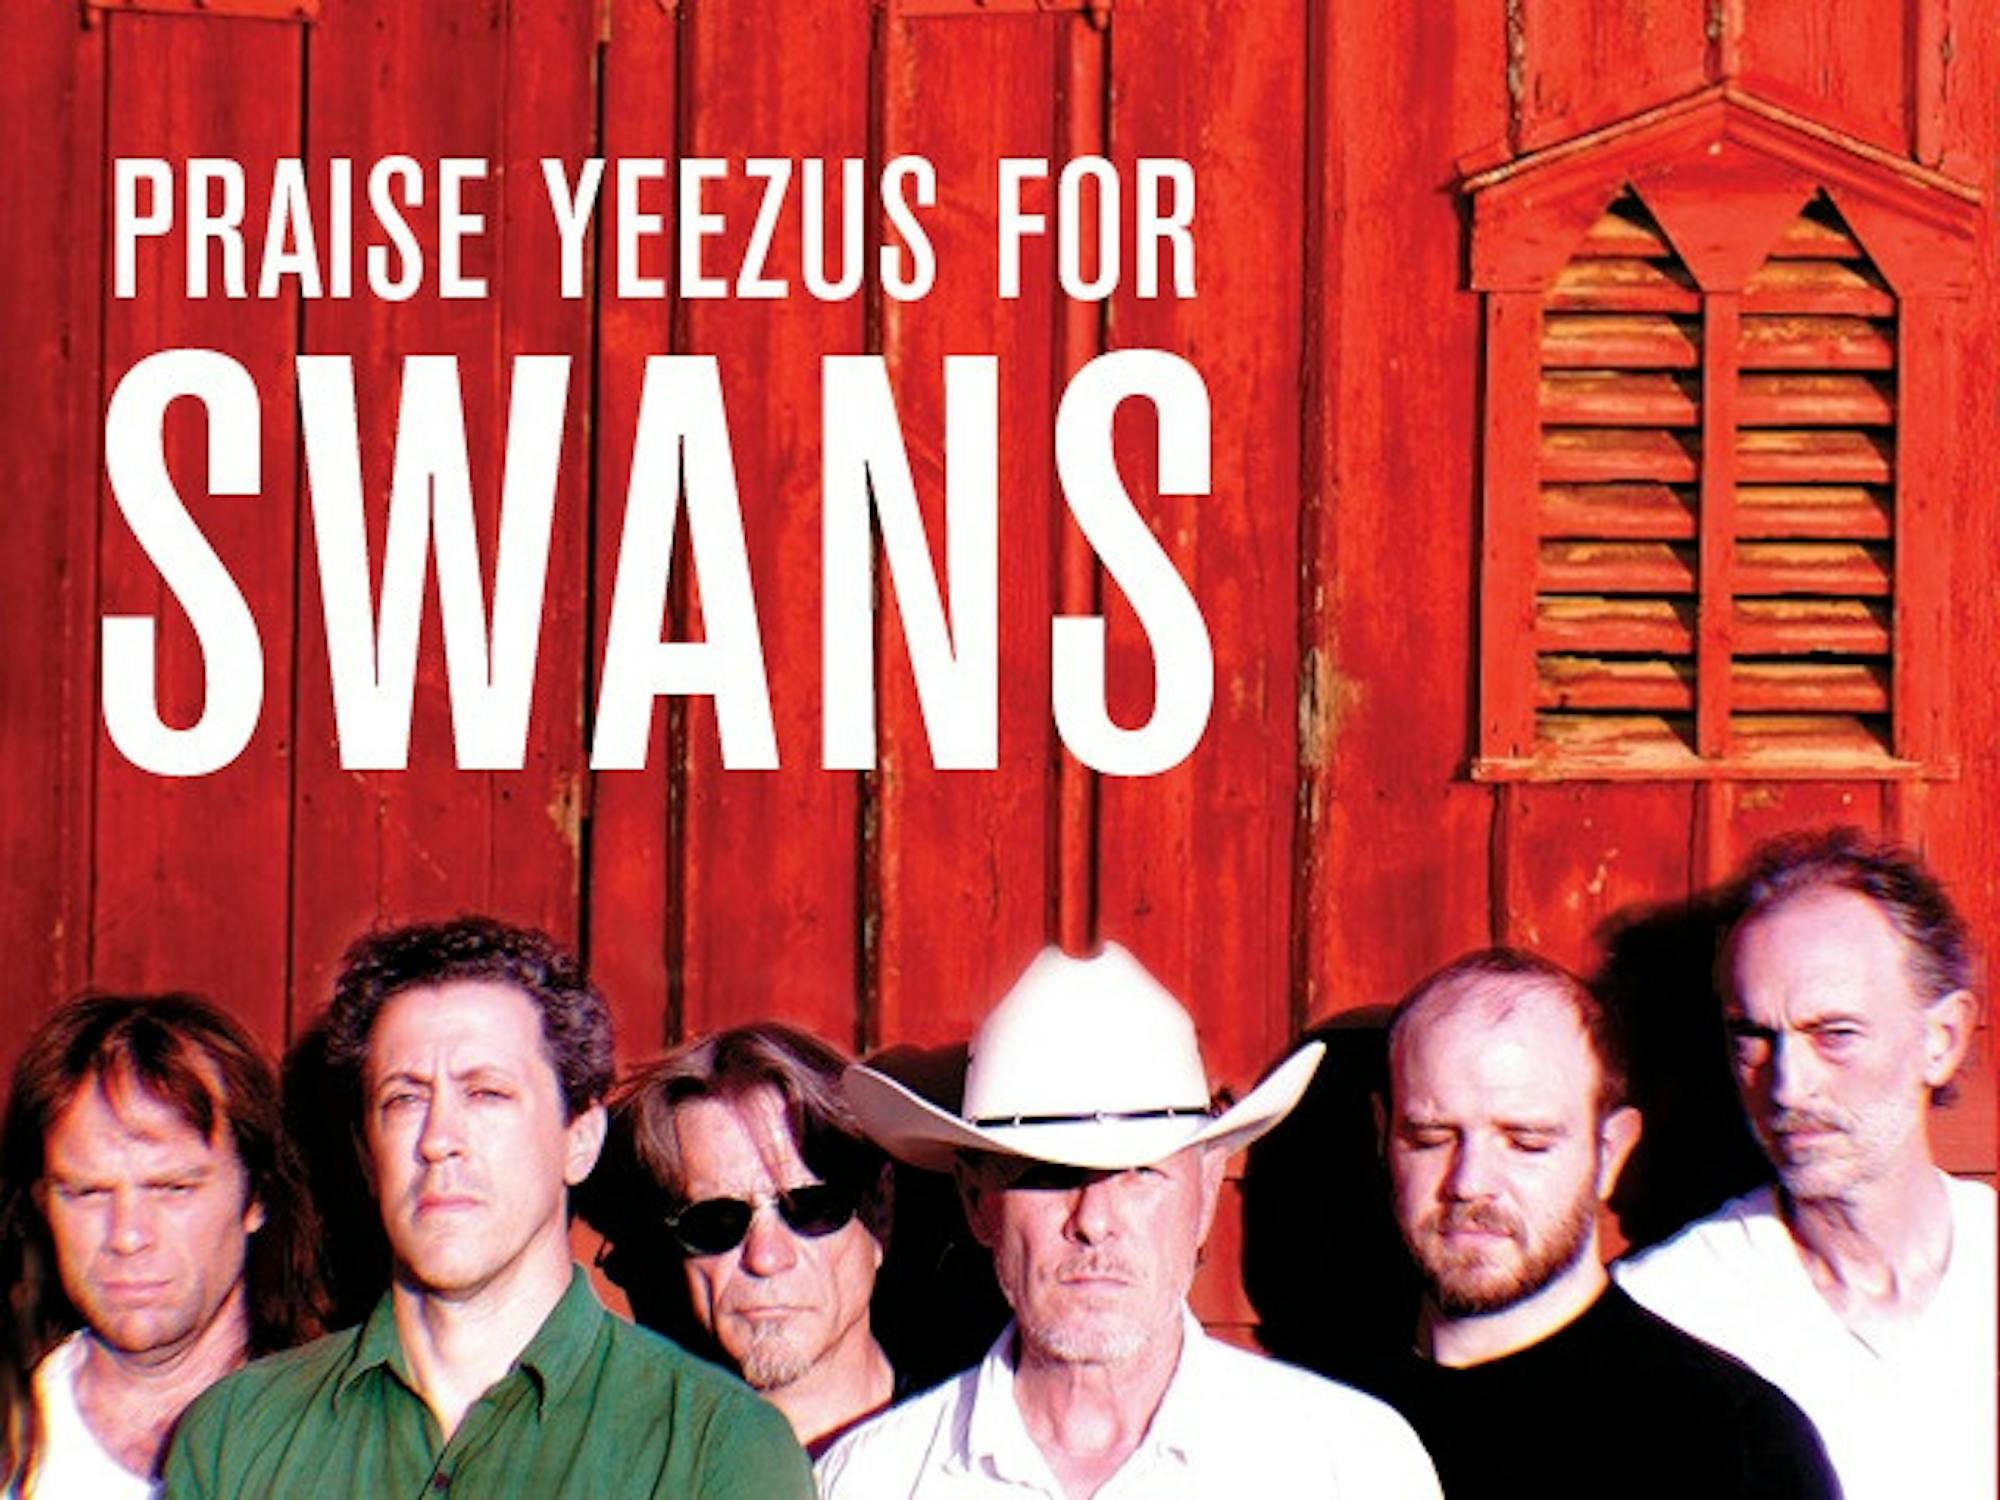 web_praise yeezus for swans_9-18-2014